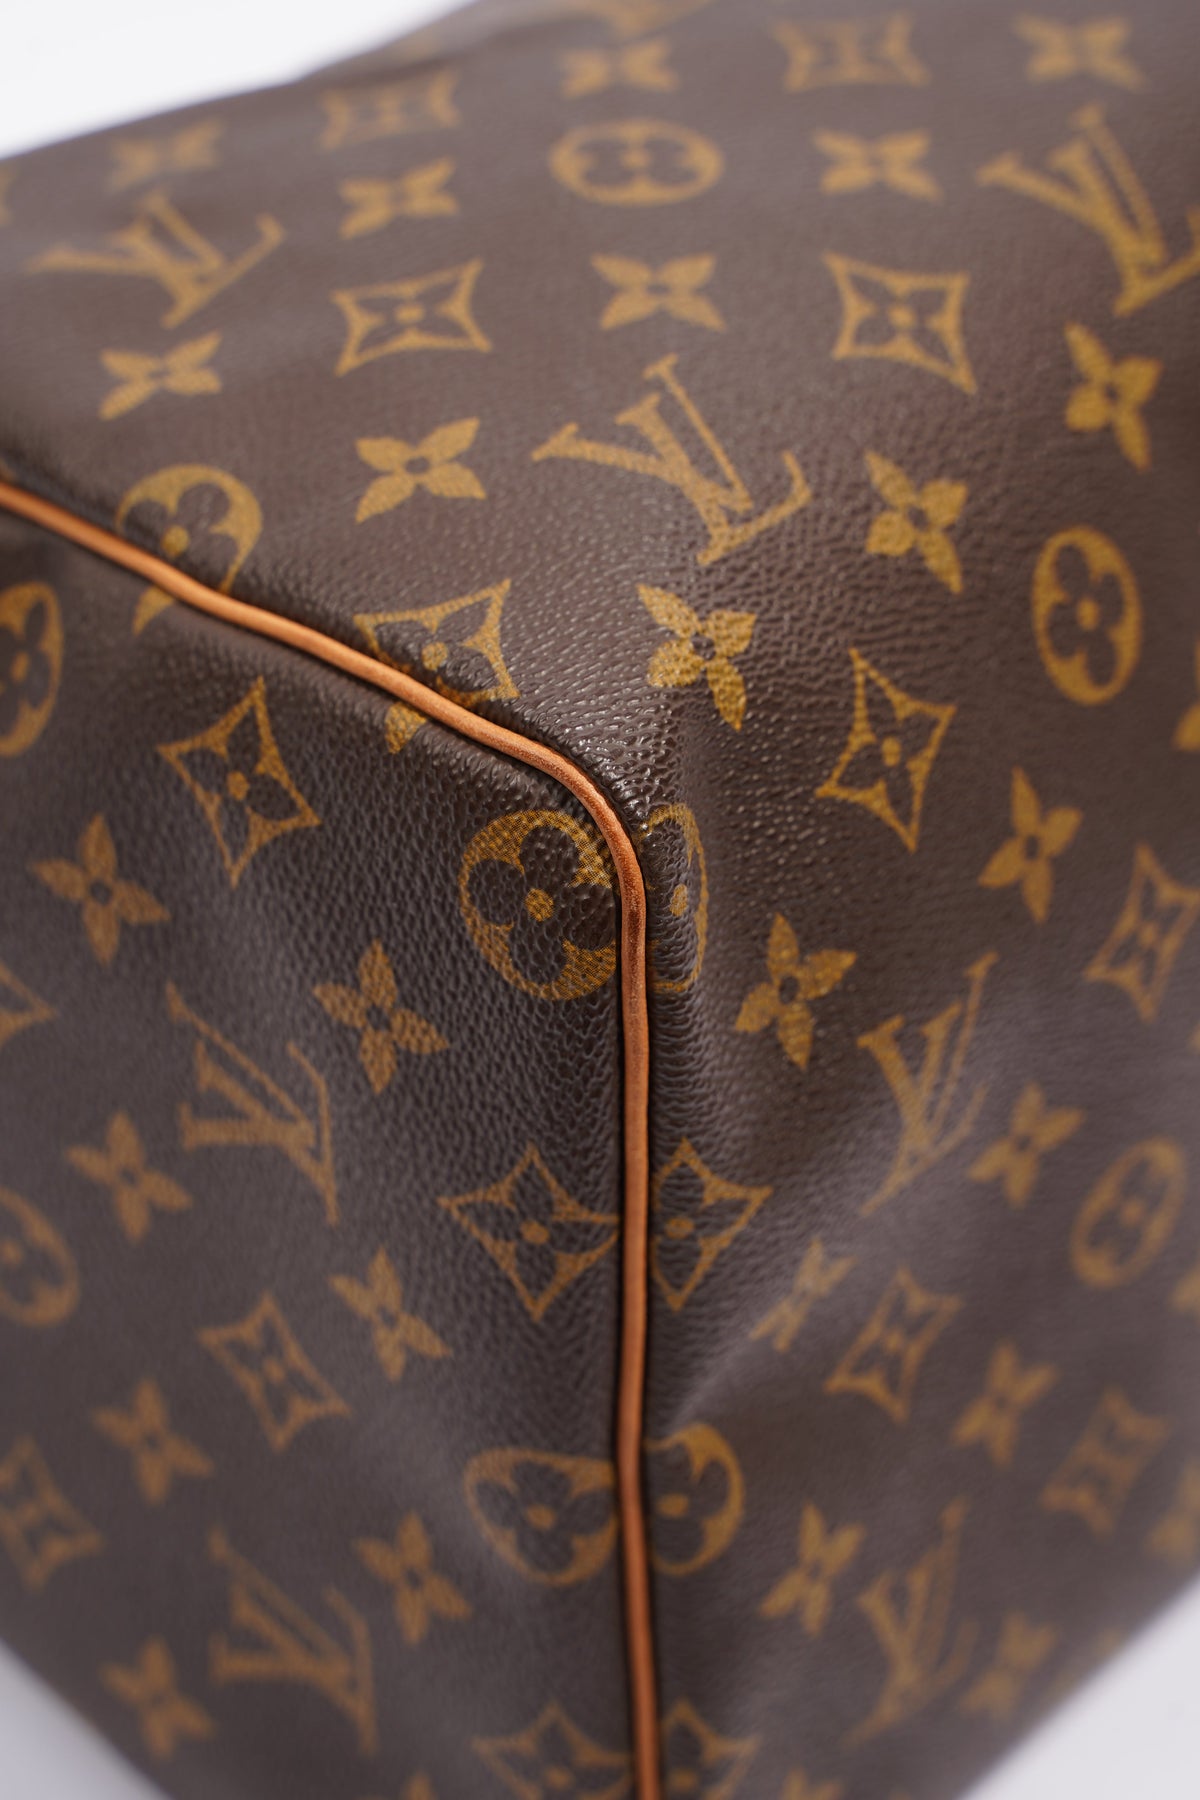 Louis Vuitton borsa bauletto Speedy vintage monogram 40. - La Belle Epoque